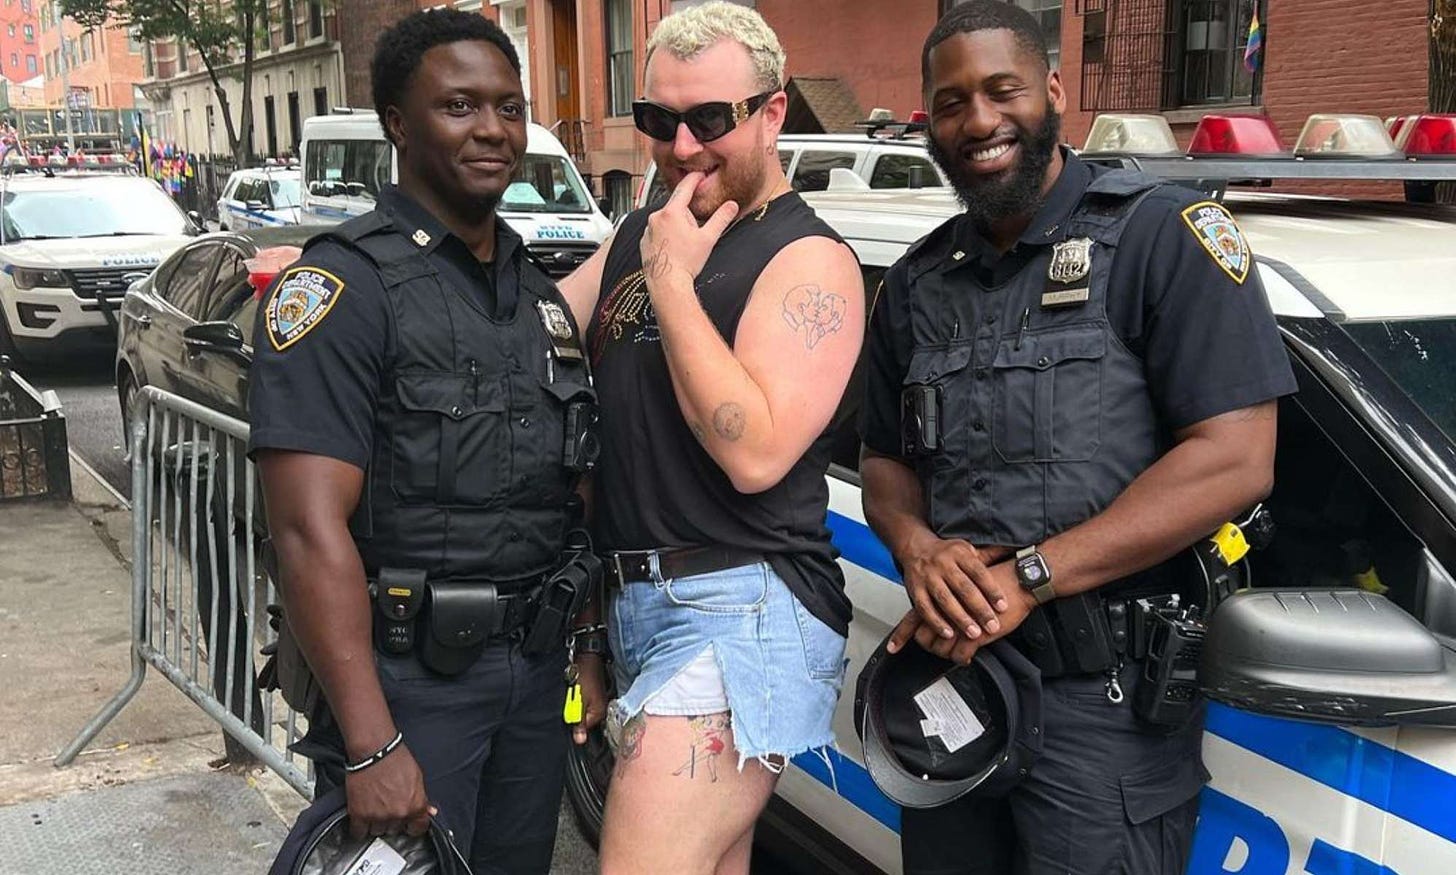 Sam Smith posing with police is blatant 'copaganda'